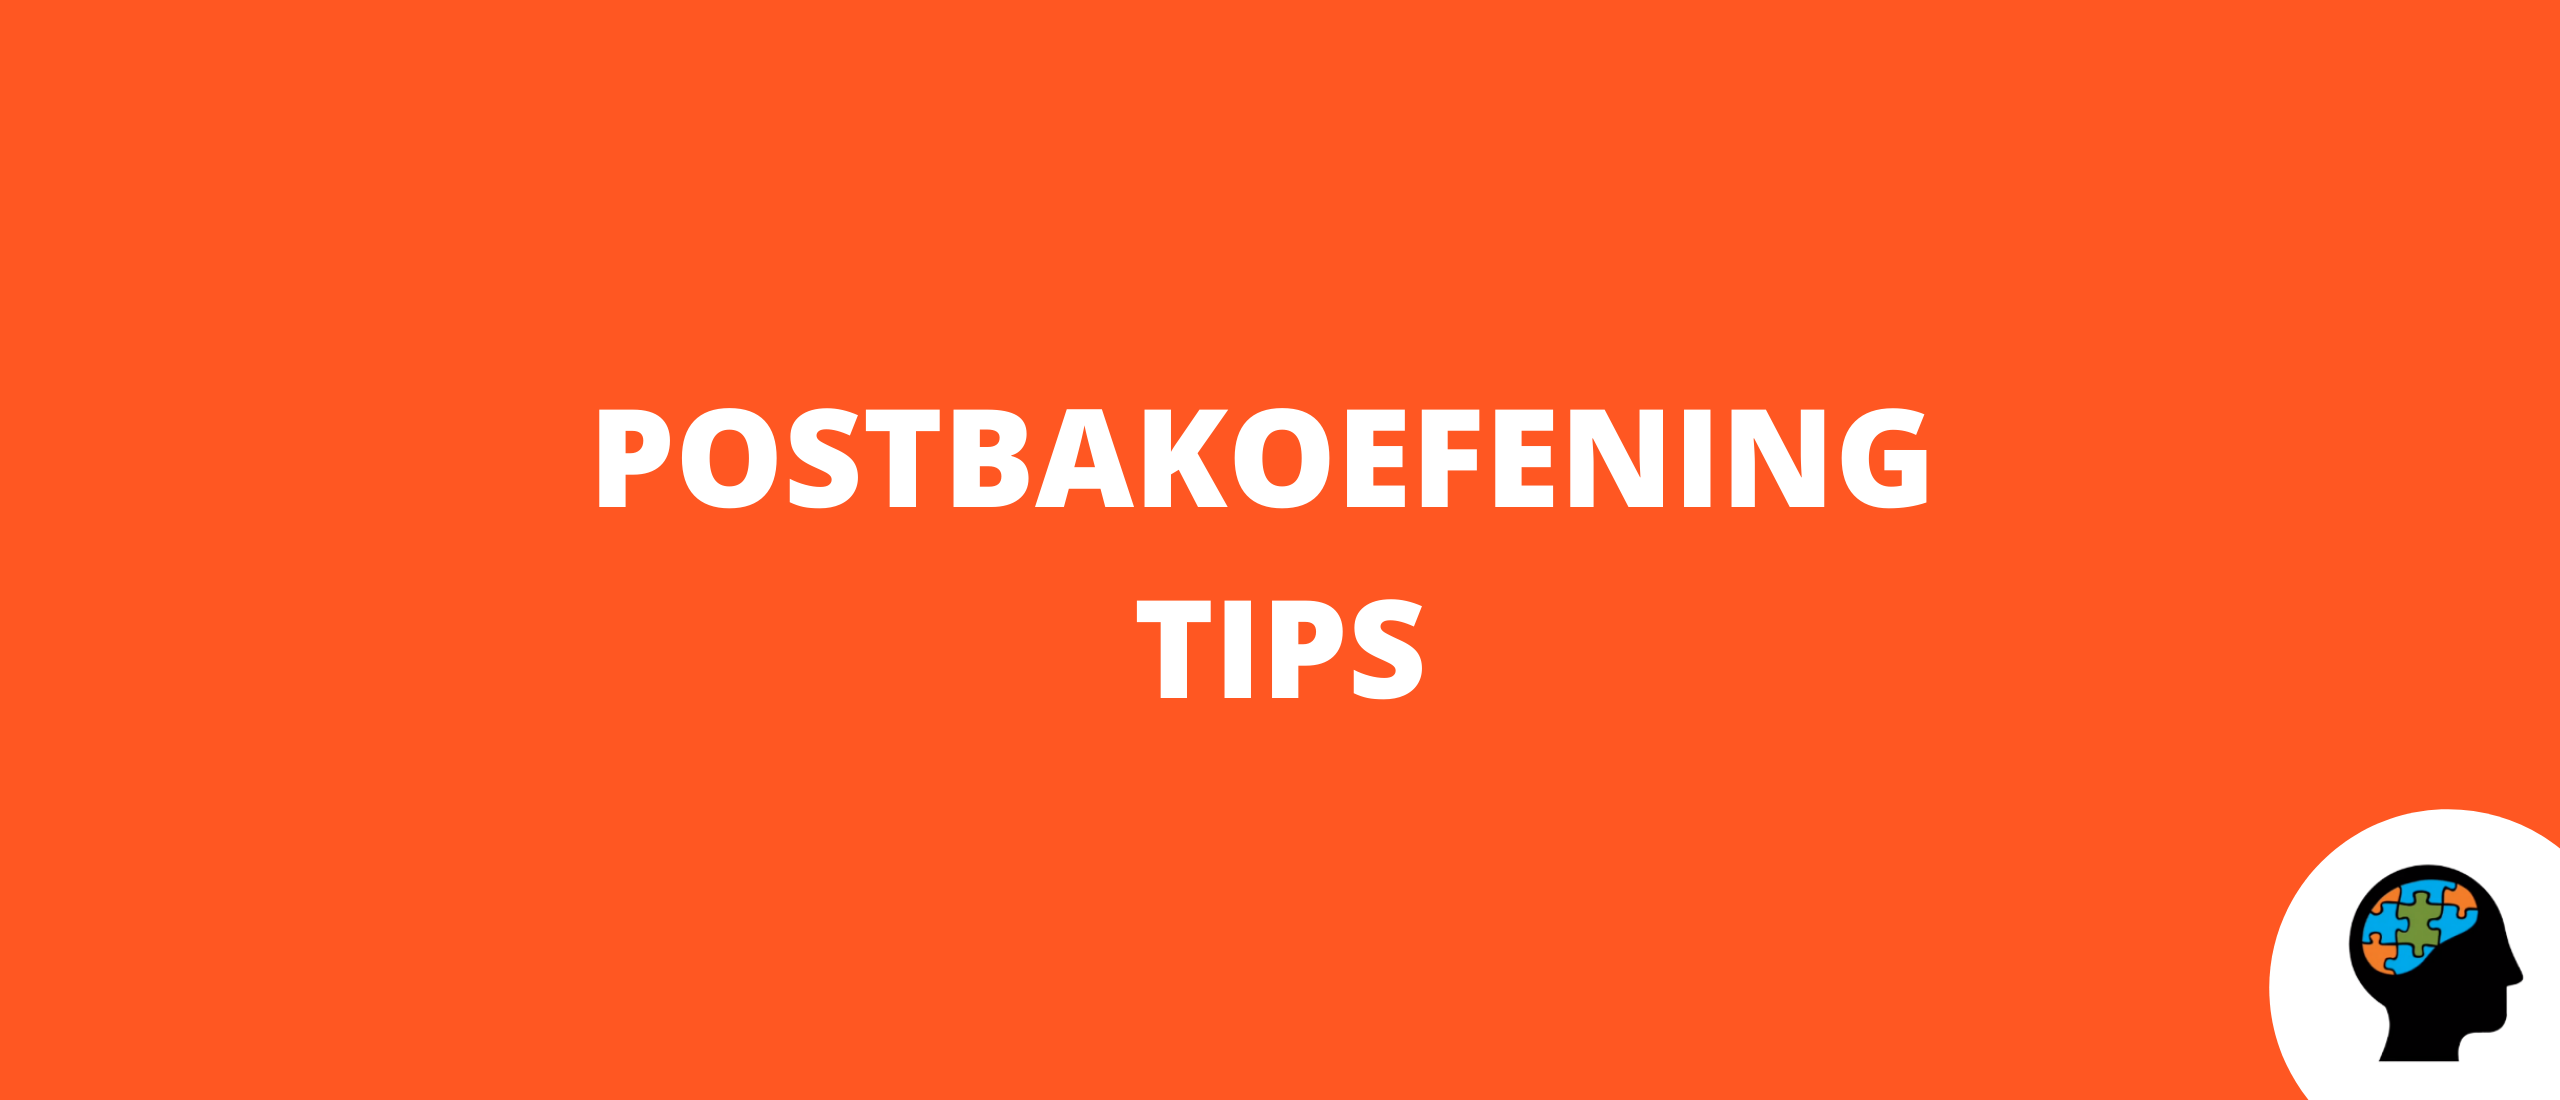 Postbakoefening tips